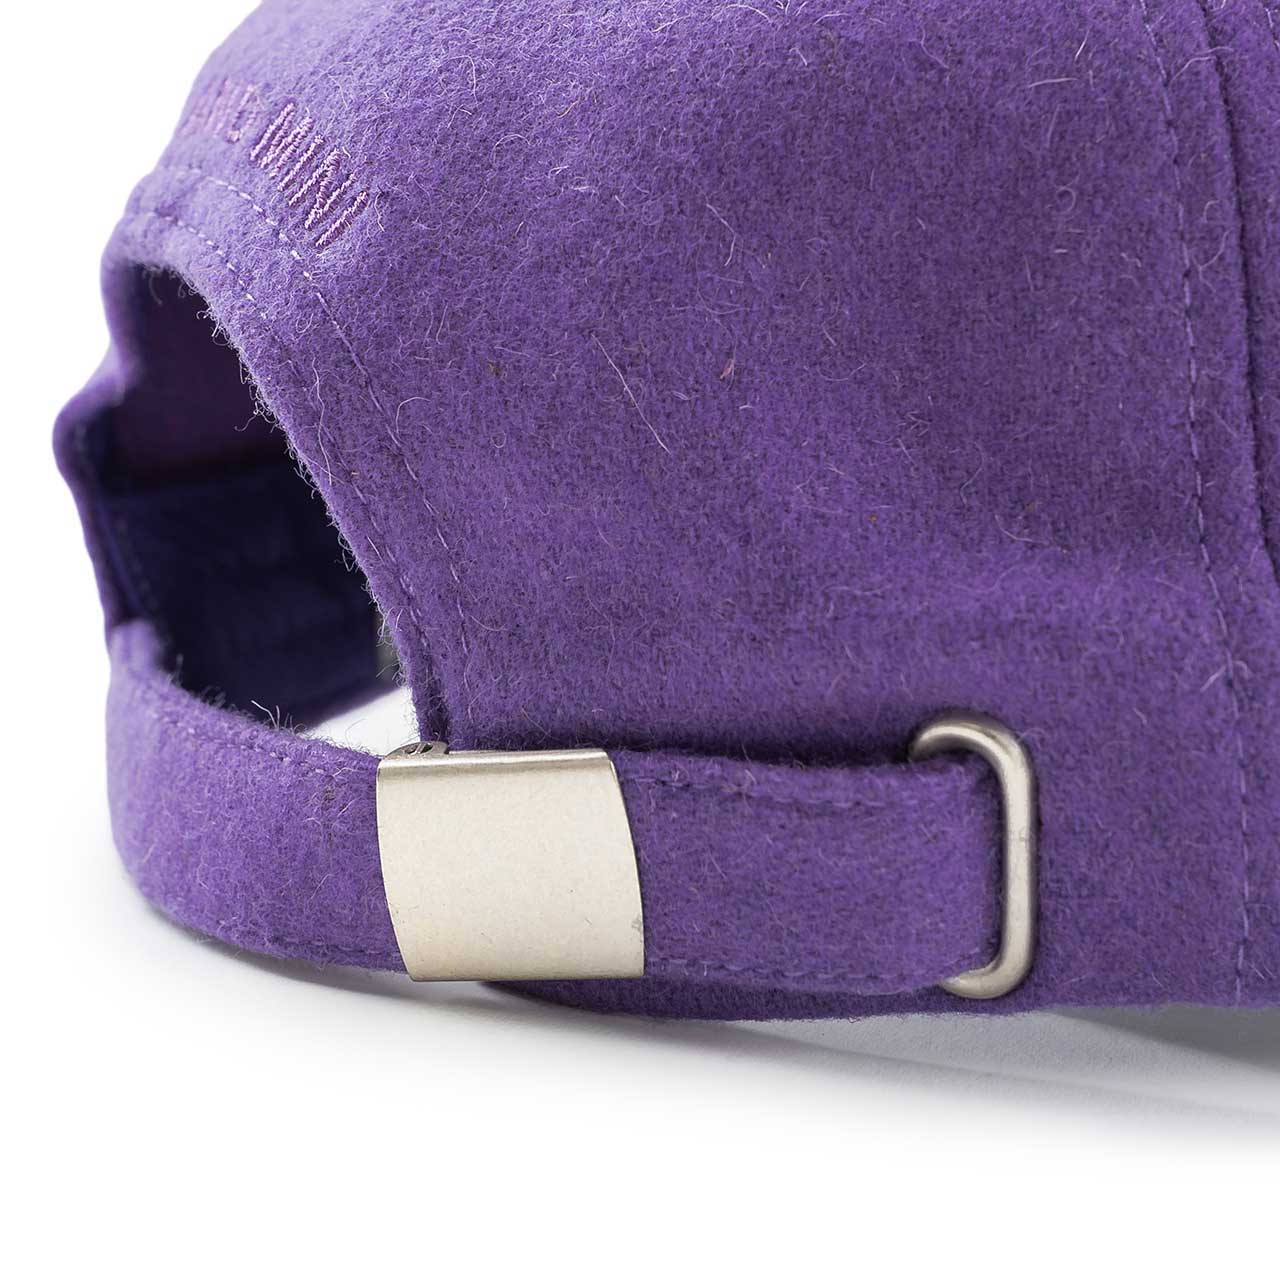 perks and mini perks and mini u.g. gesture wool cap (purple) 9816-PR